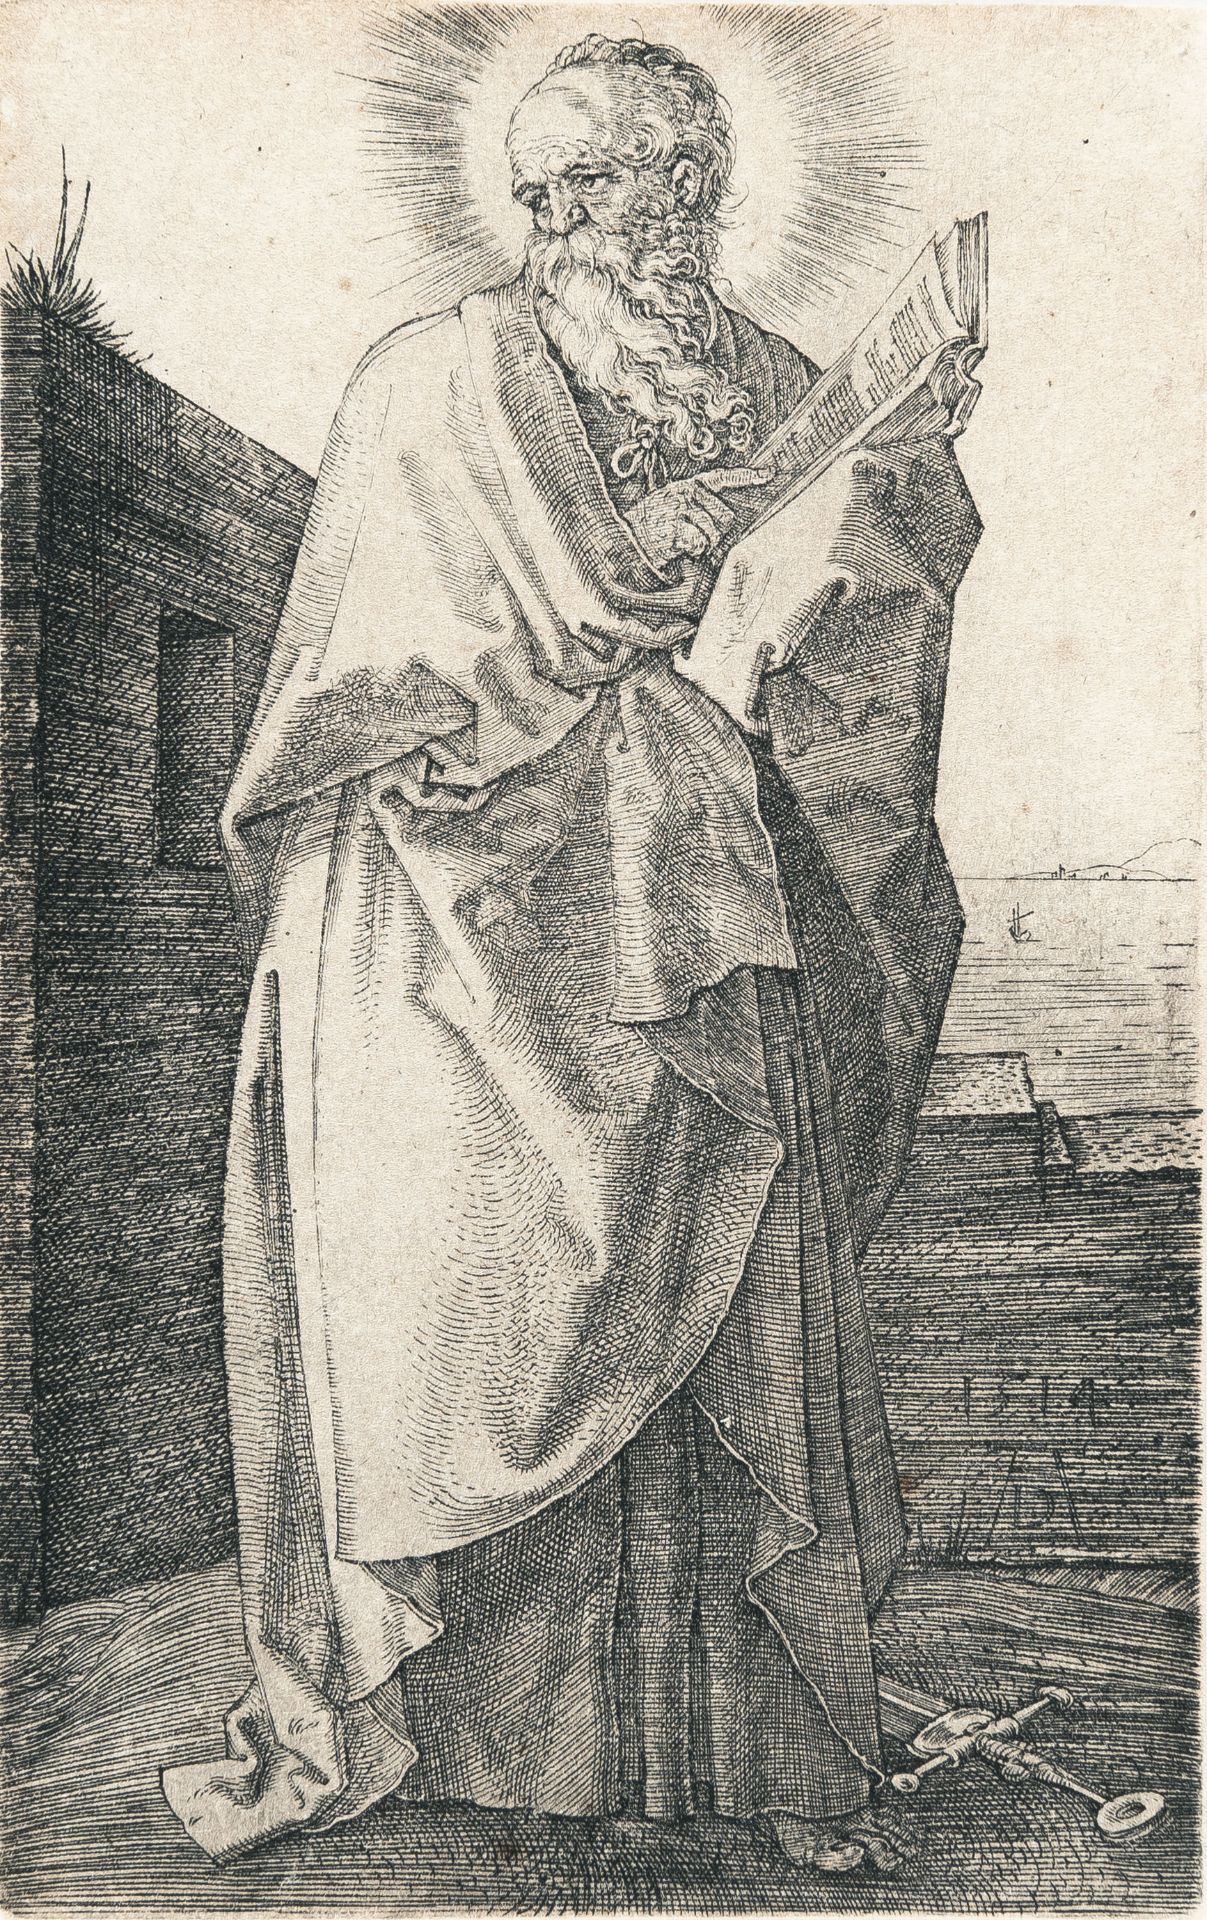 Albrecht Dürer, The Apostle Paul.Engraving on laid paper. (1514). 11.8 x 7.5 cm (sheet size).